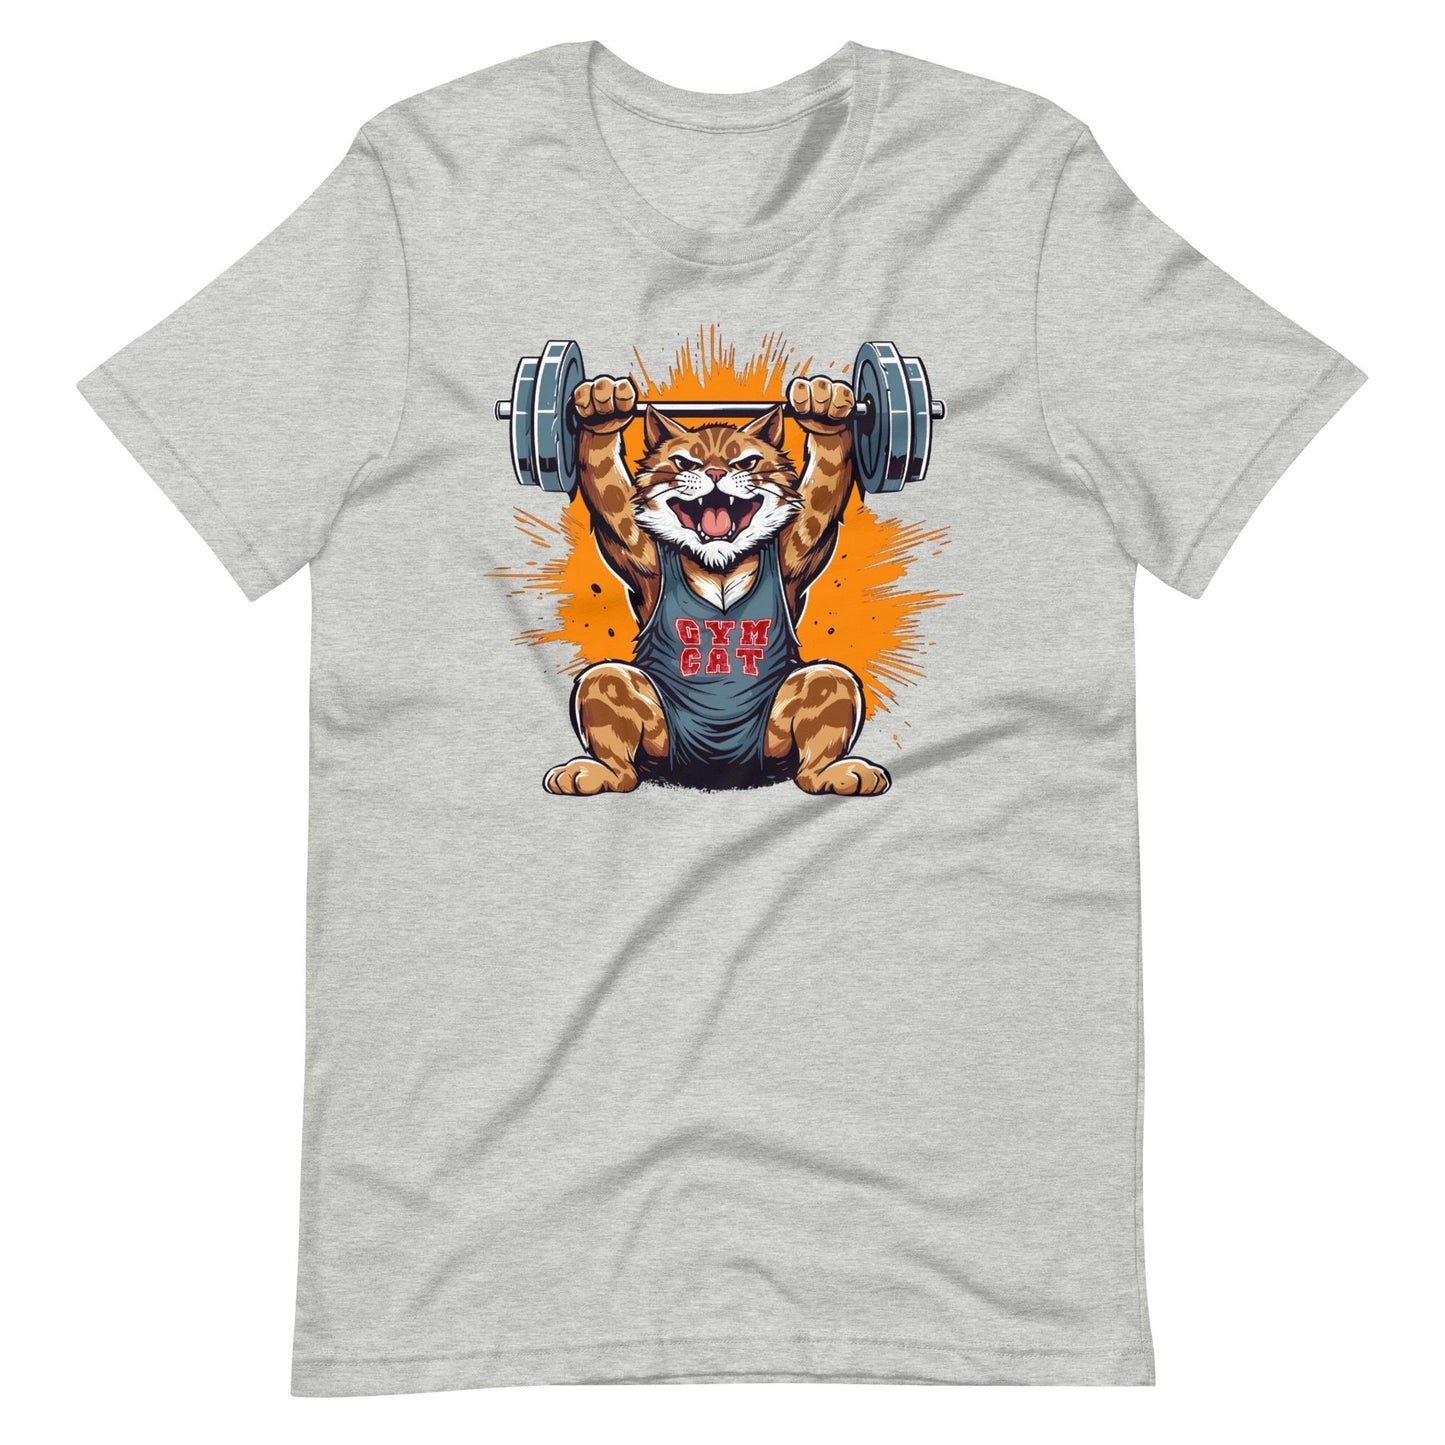 Gym Cat T-Shirt